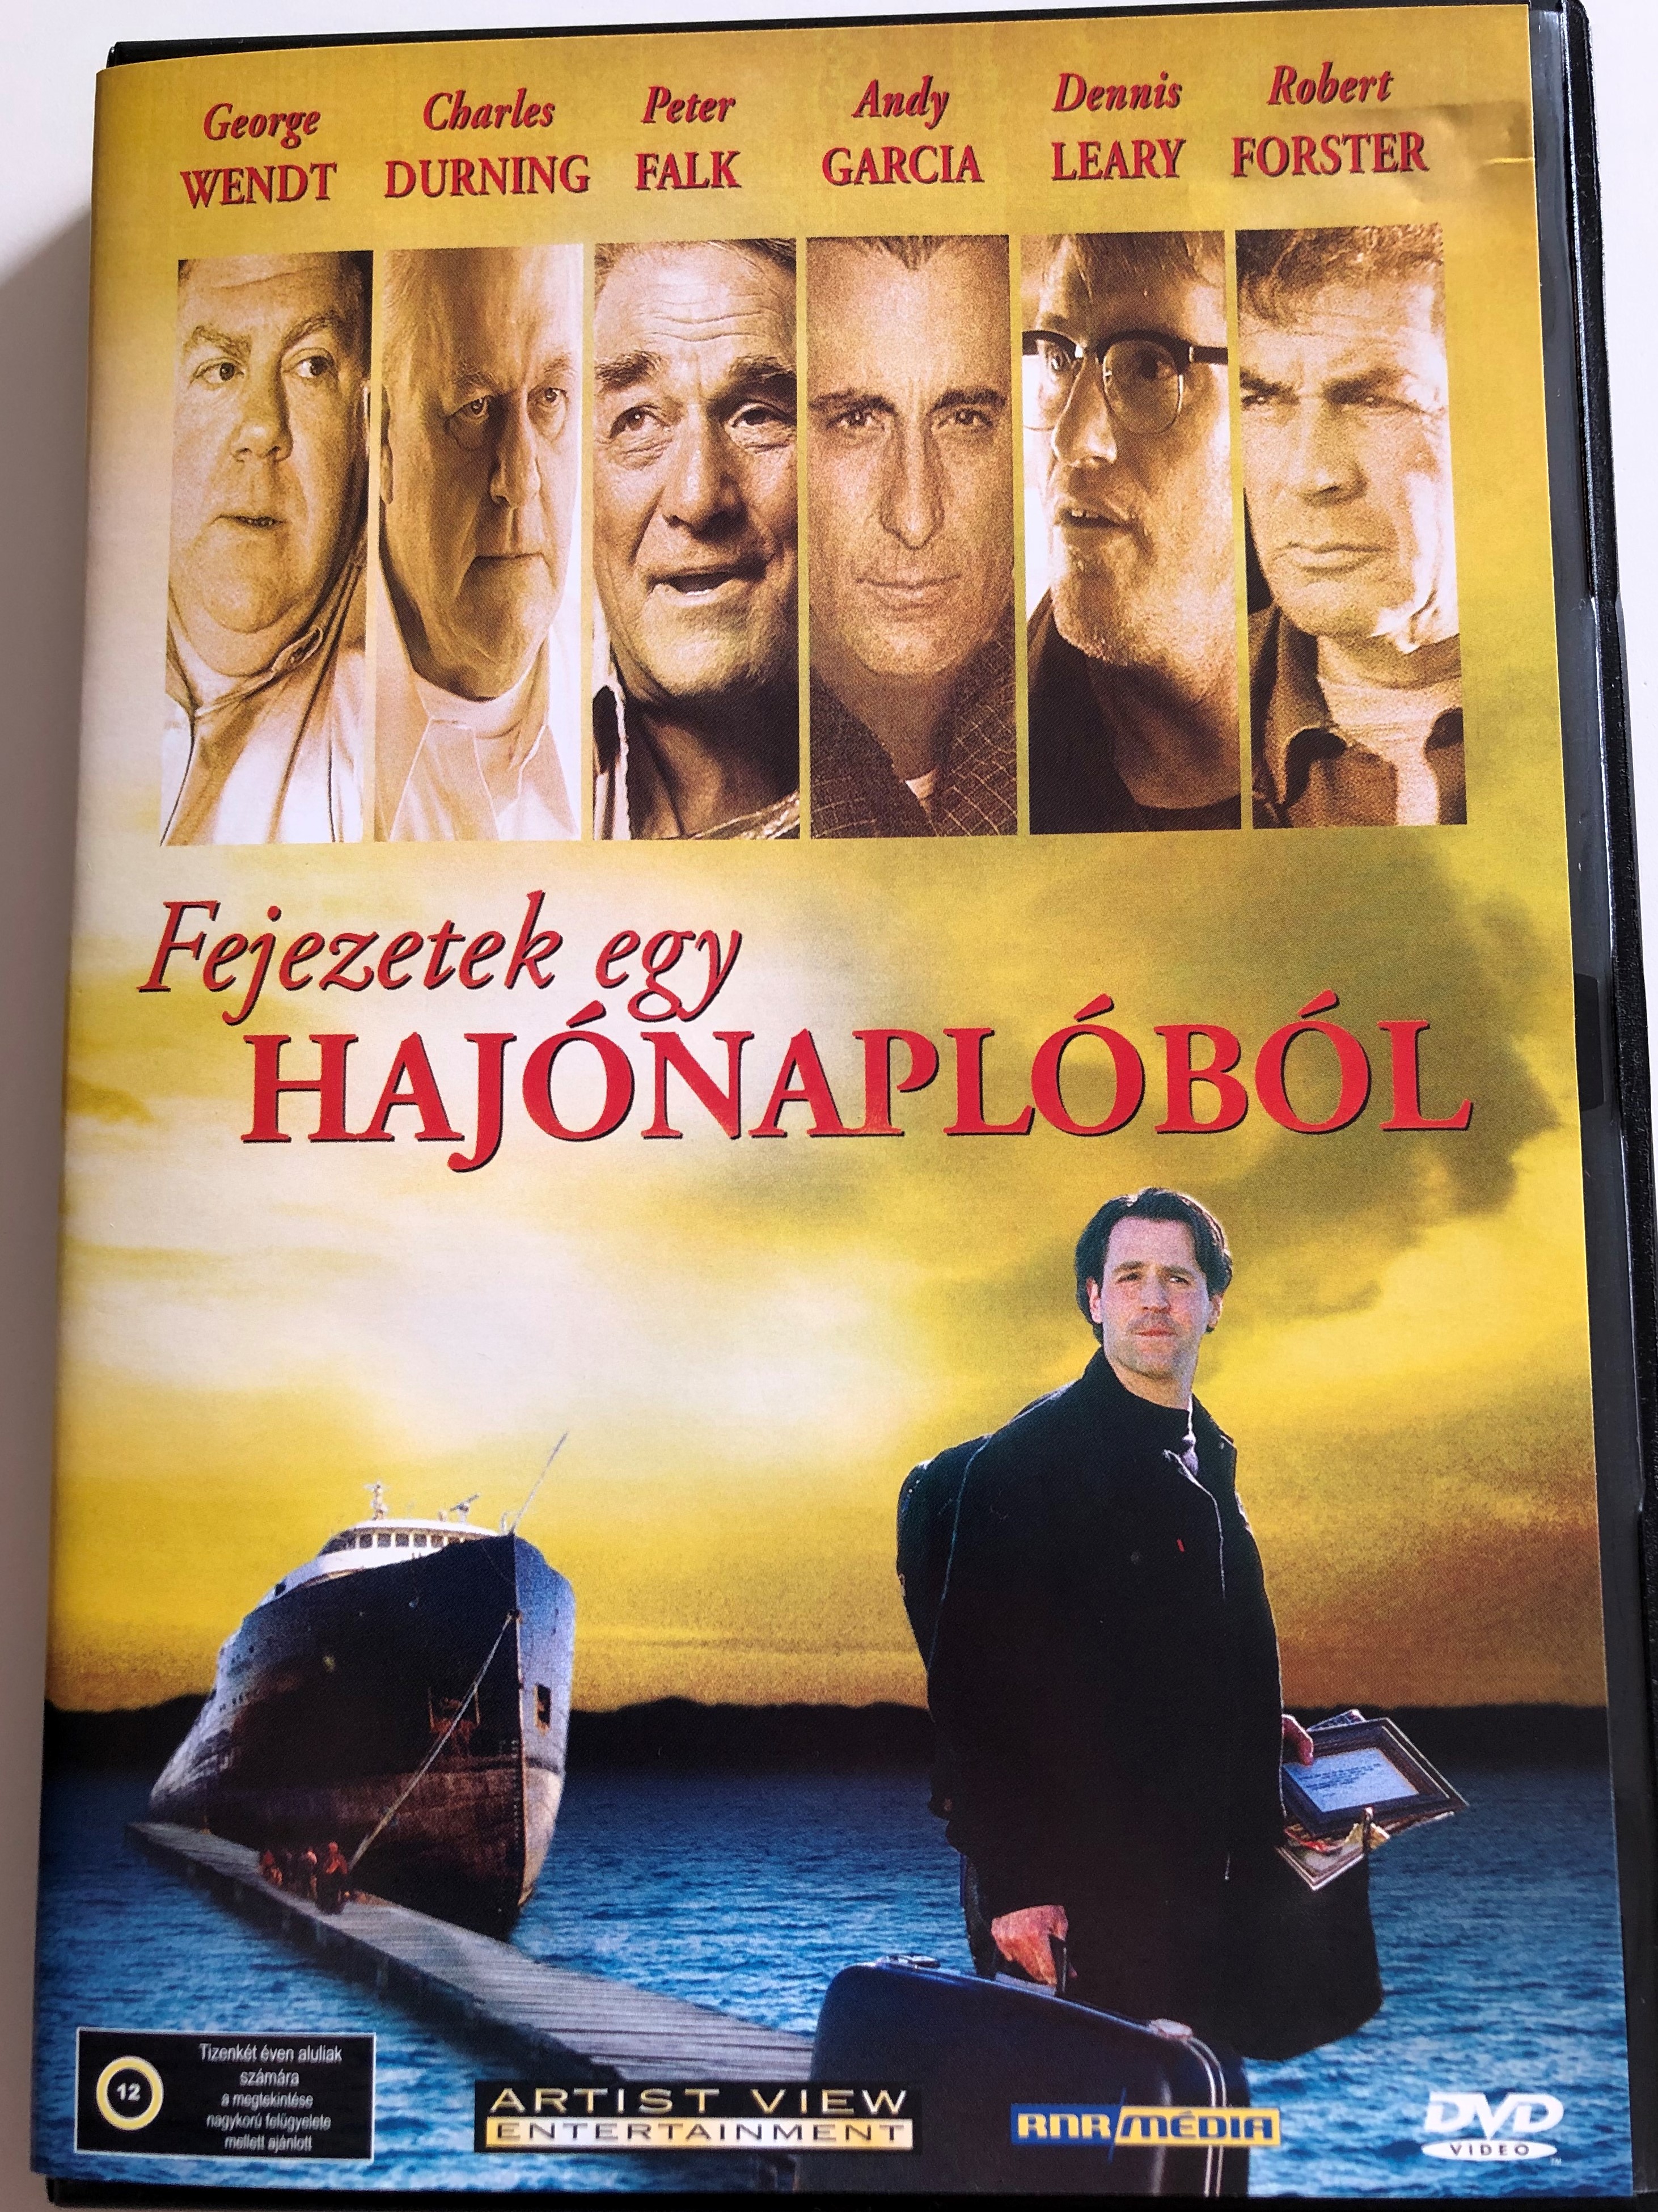 lakeboat-dvd-2000-fejezetek-egy-haj-napl-b-l-directed-by-joe-mantegna-starring-charles-durning-peter-falk-denis-leary-andy-garc-a-roberta-angelica-1-.jpg